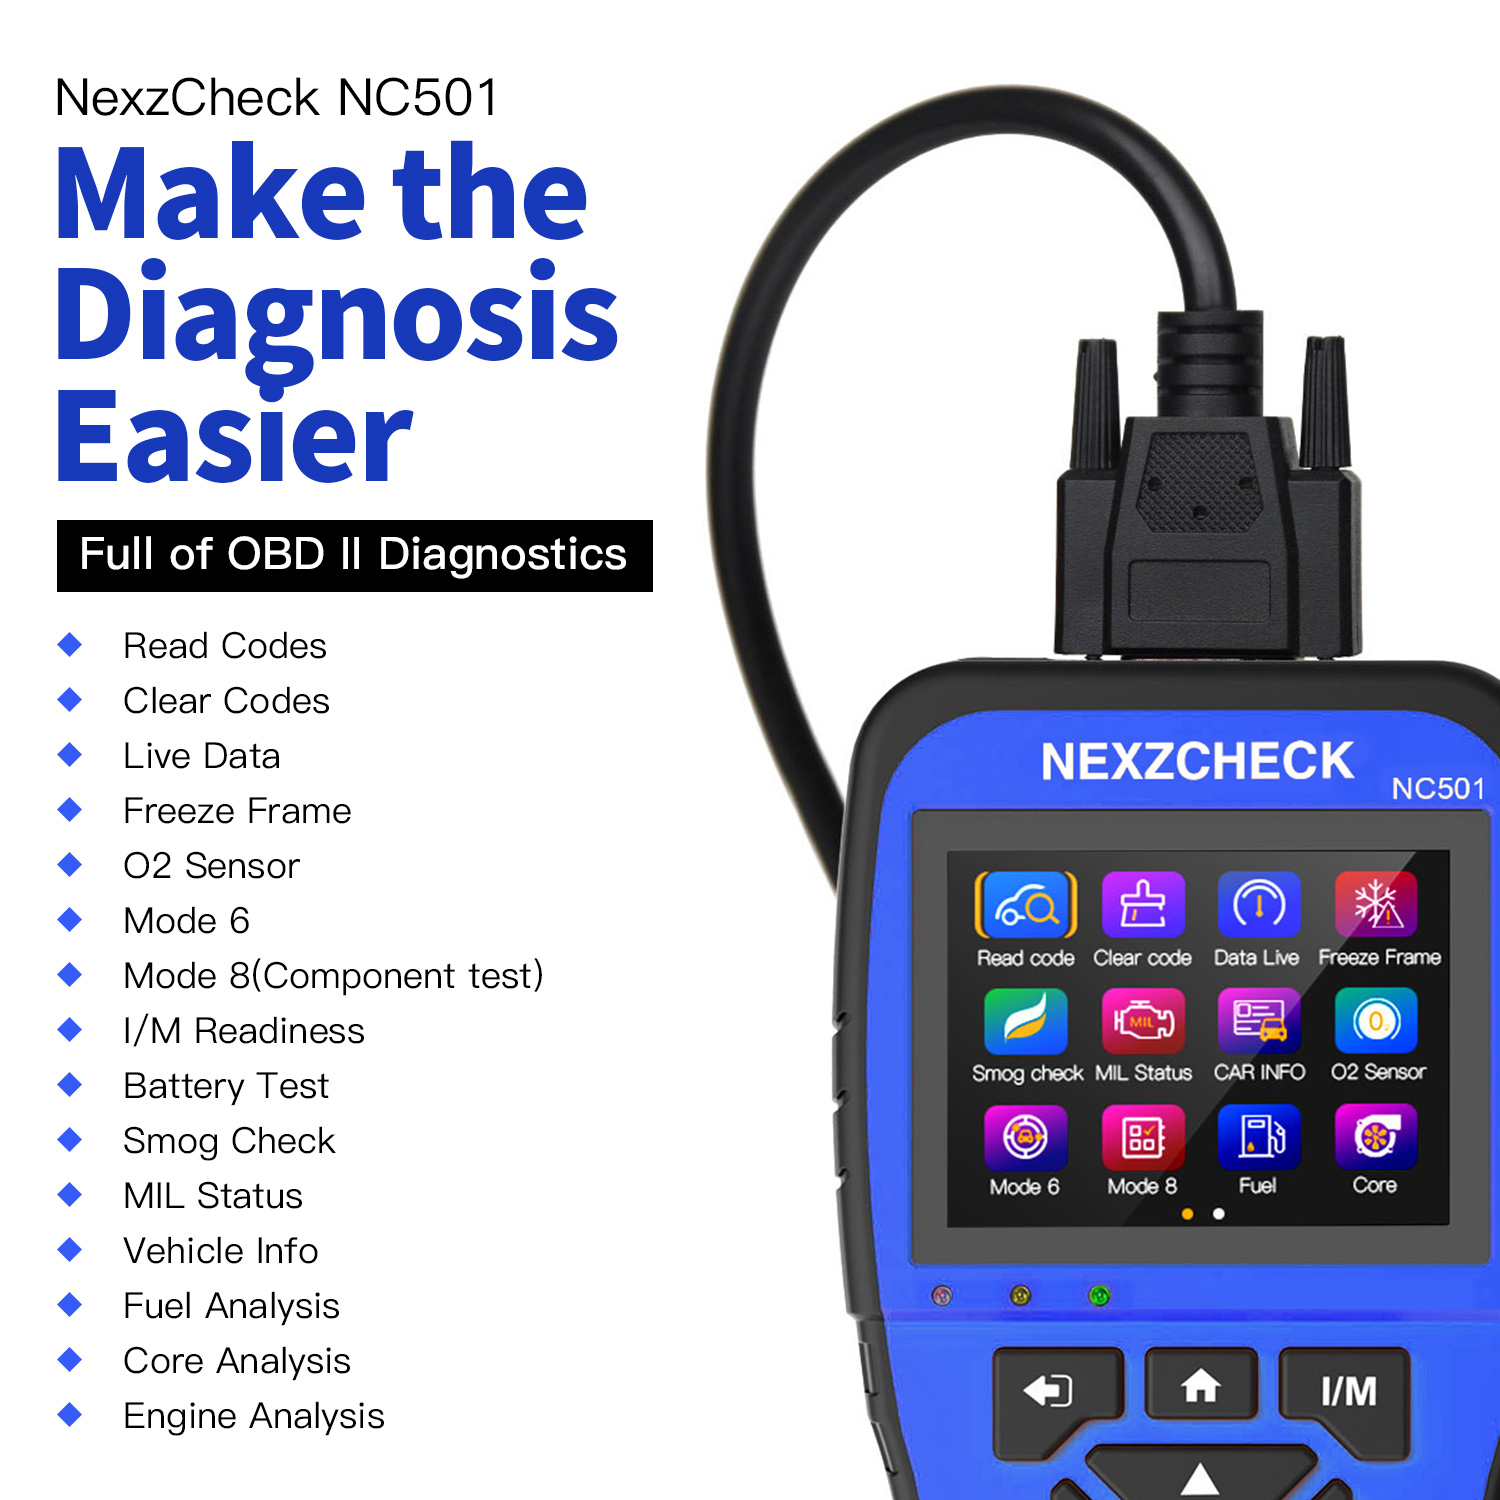 NexzCheck NC501 diagnostic